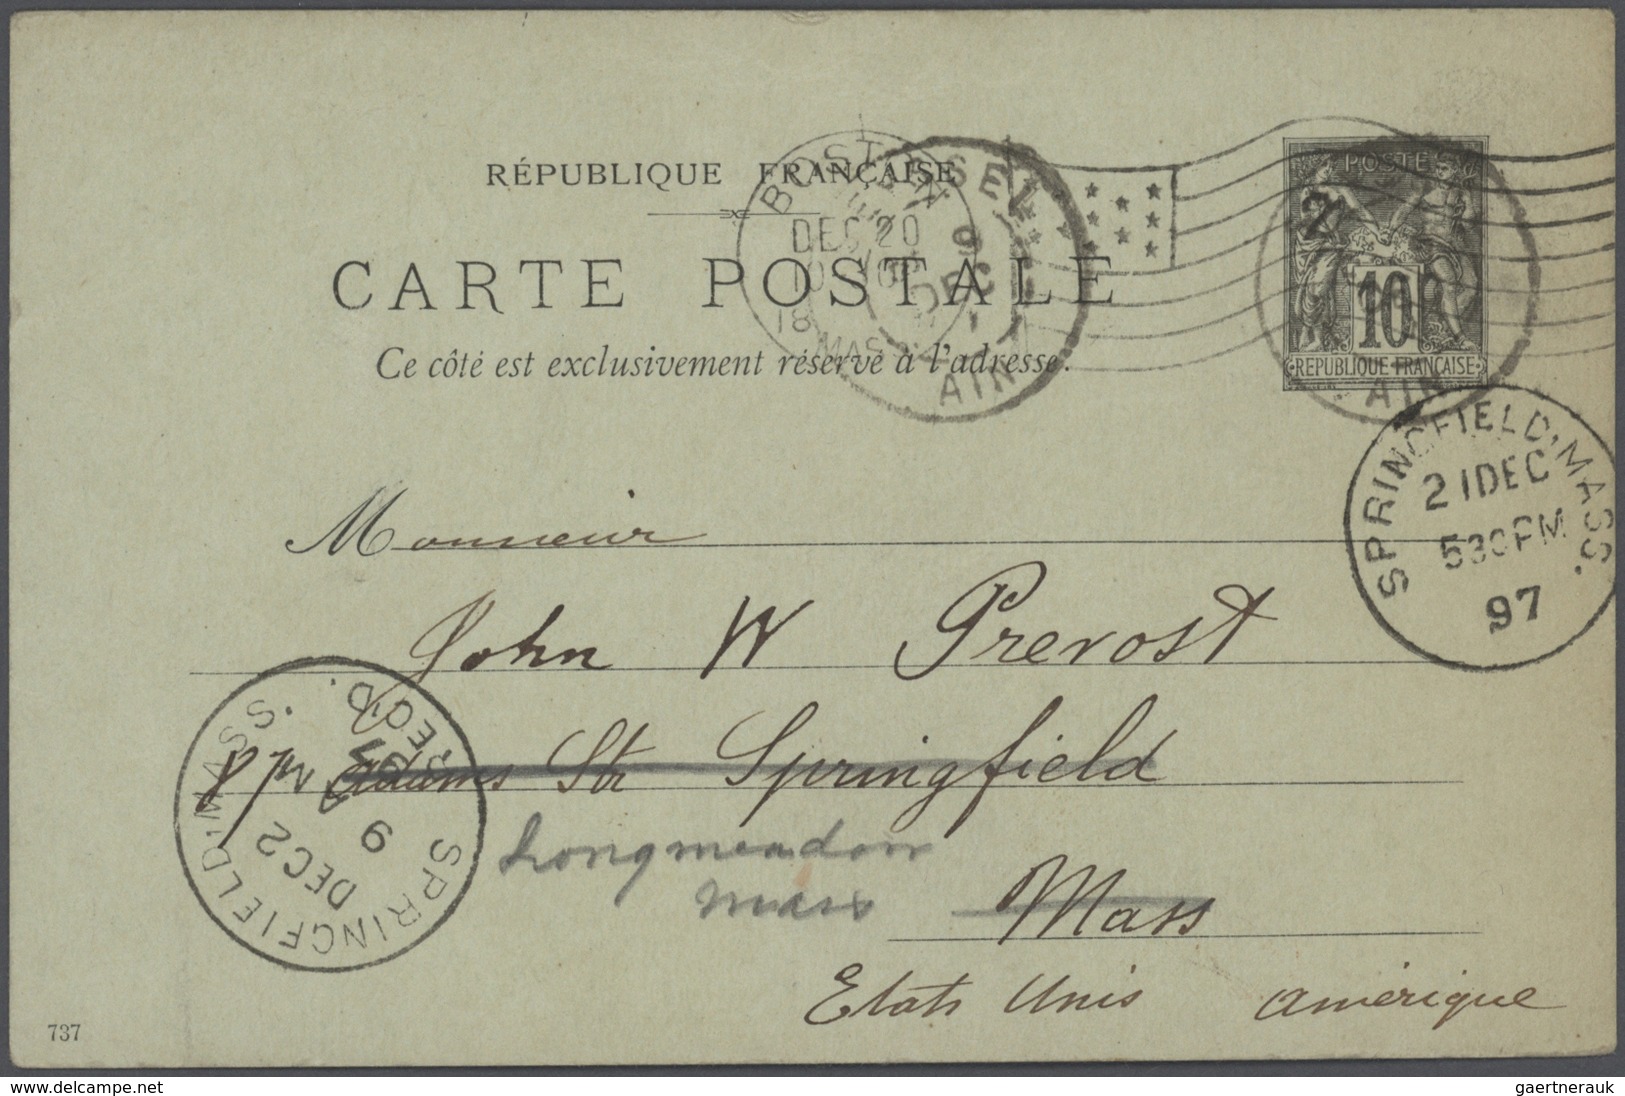 Frankreich - Ganzsachen: 1880/1901, Type Sage, accumulation of apprx. 168 stationeries (cards, doubl